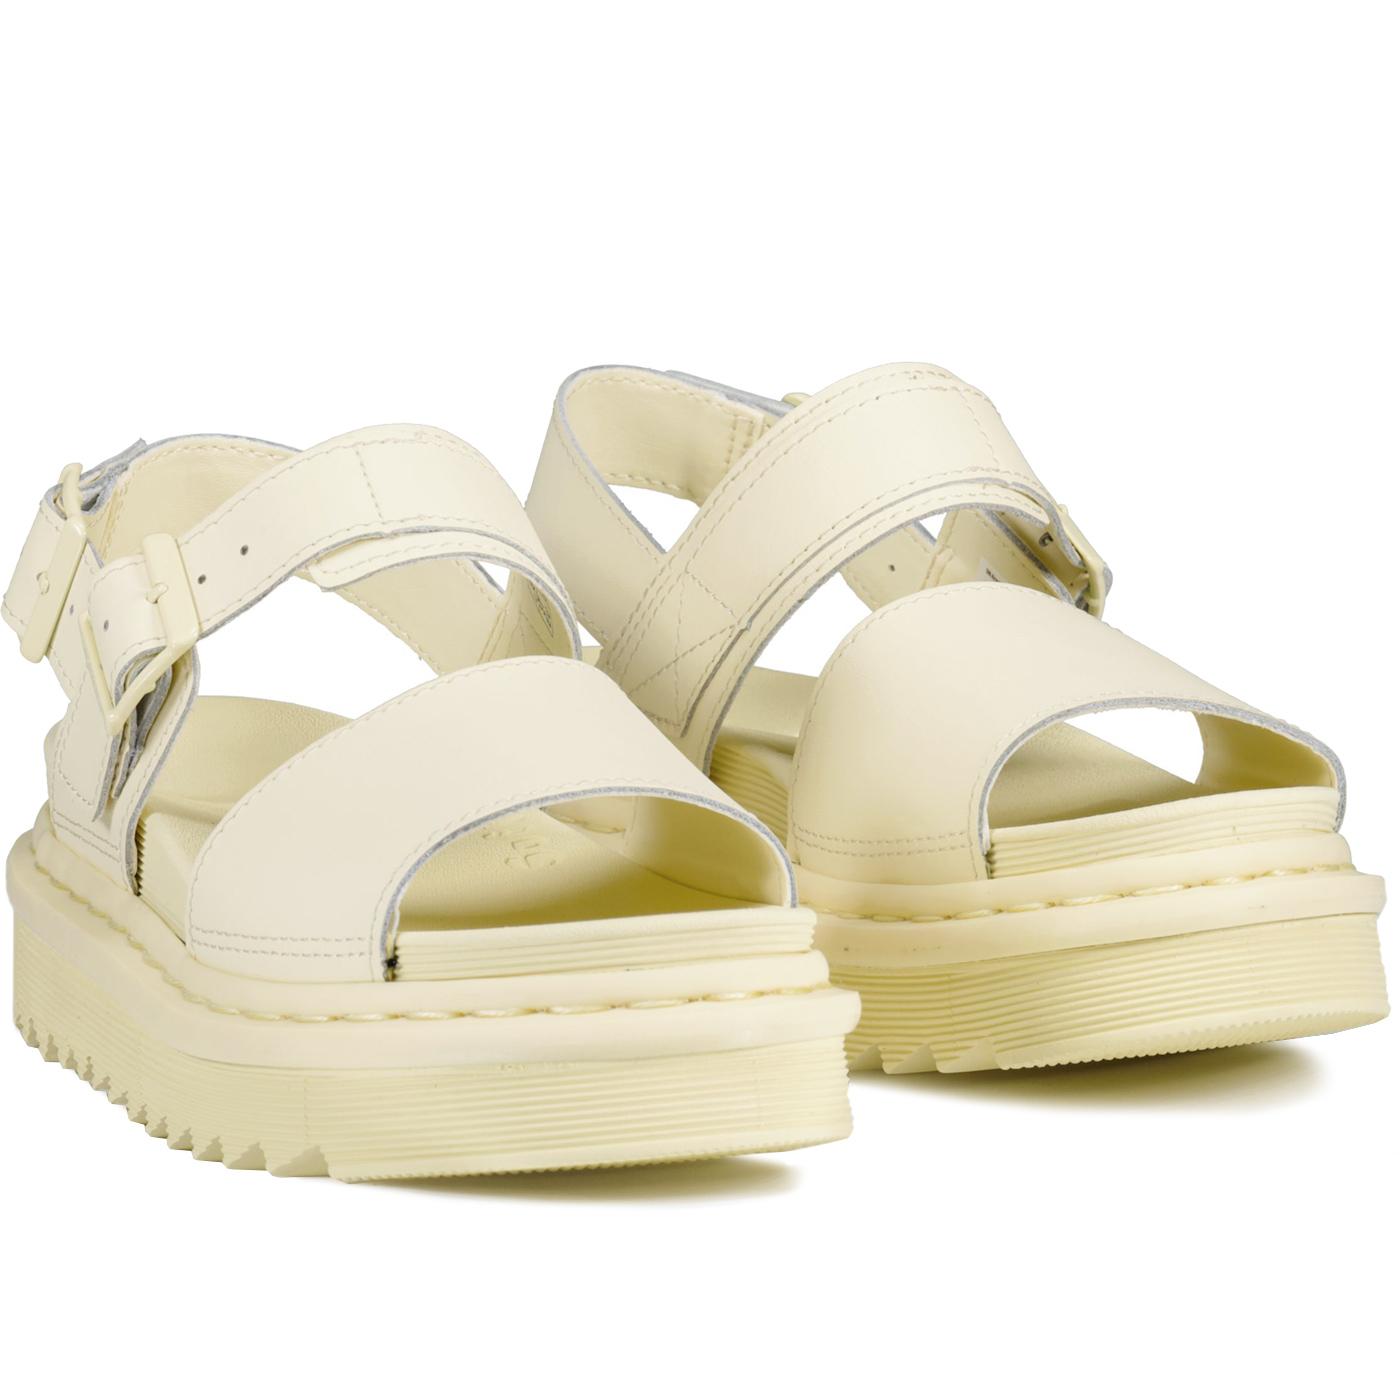 DR MARTENS Voss Mono Hydro Leather Sandals in Toile Cream